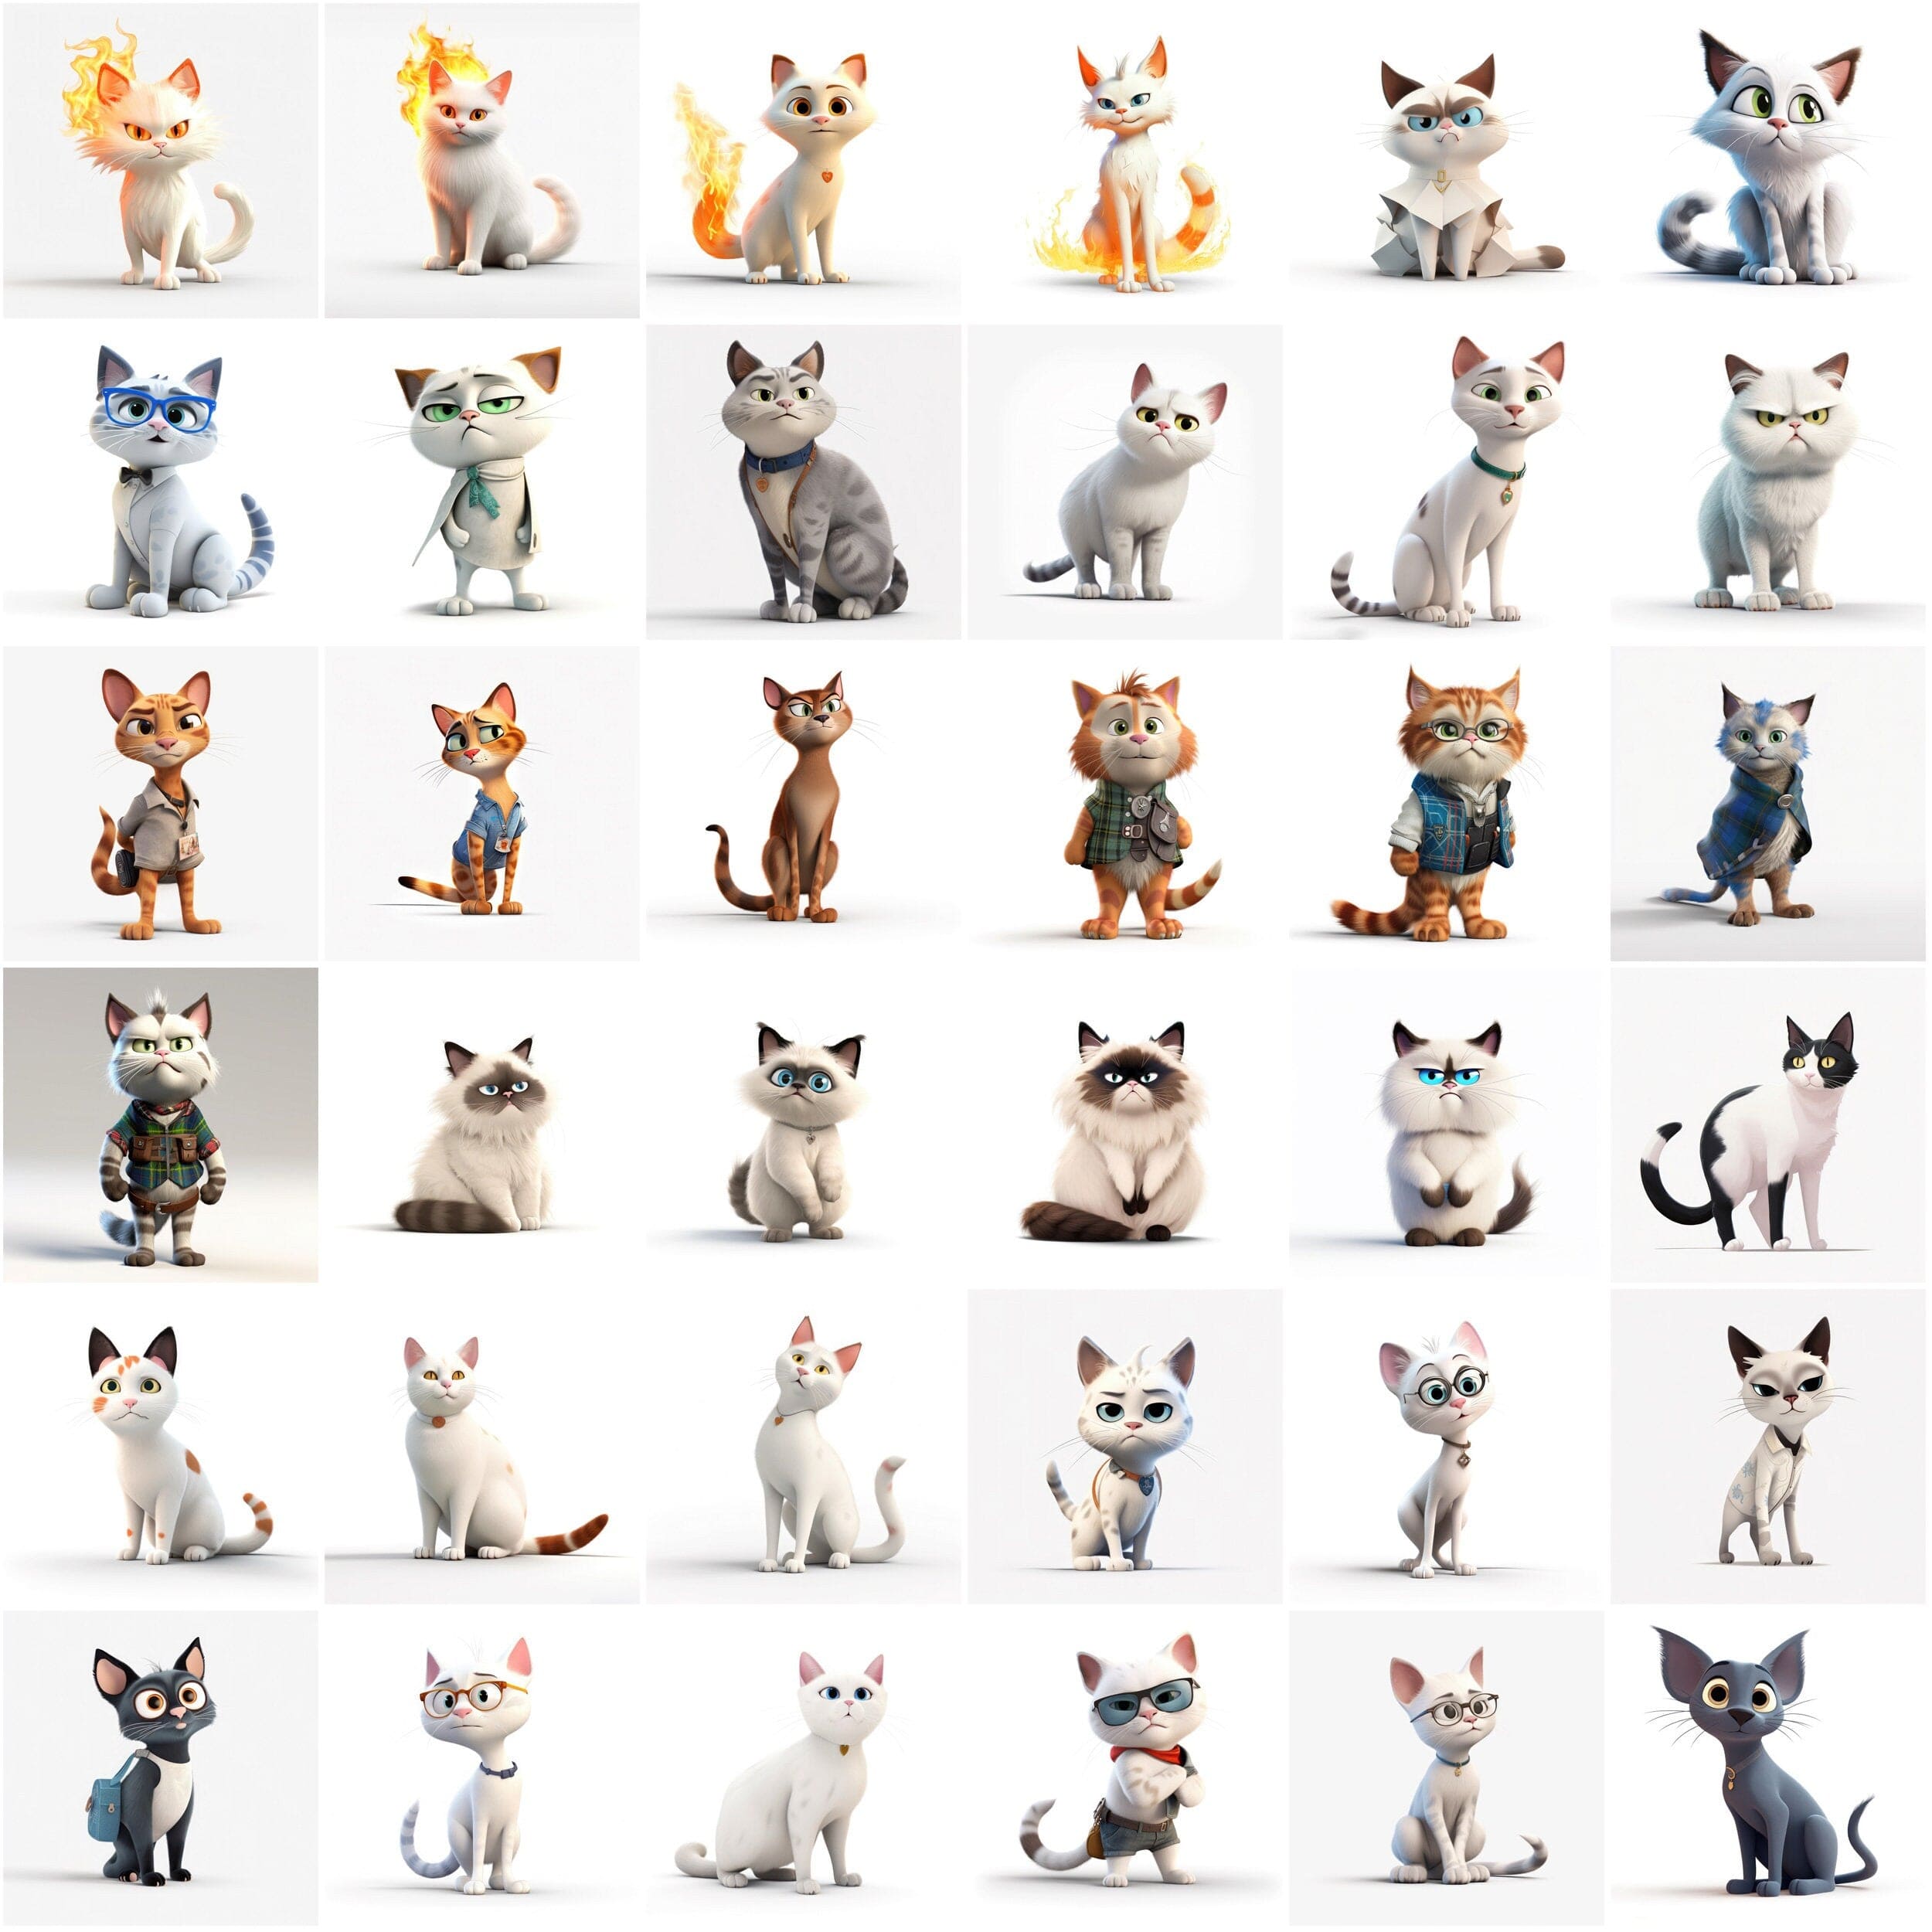 3D & Cartoon Cat Image Bundle - 370 Transparent PNG Cat Graphics for Creative Projects - Ultimate Cat Lovers' 3D Cartoon Image Collection Digital Download Sumobundle